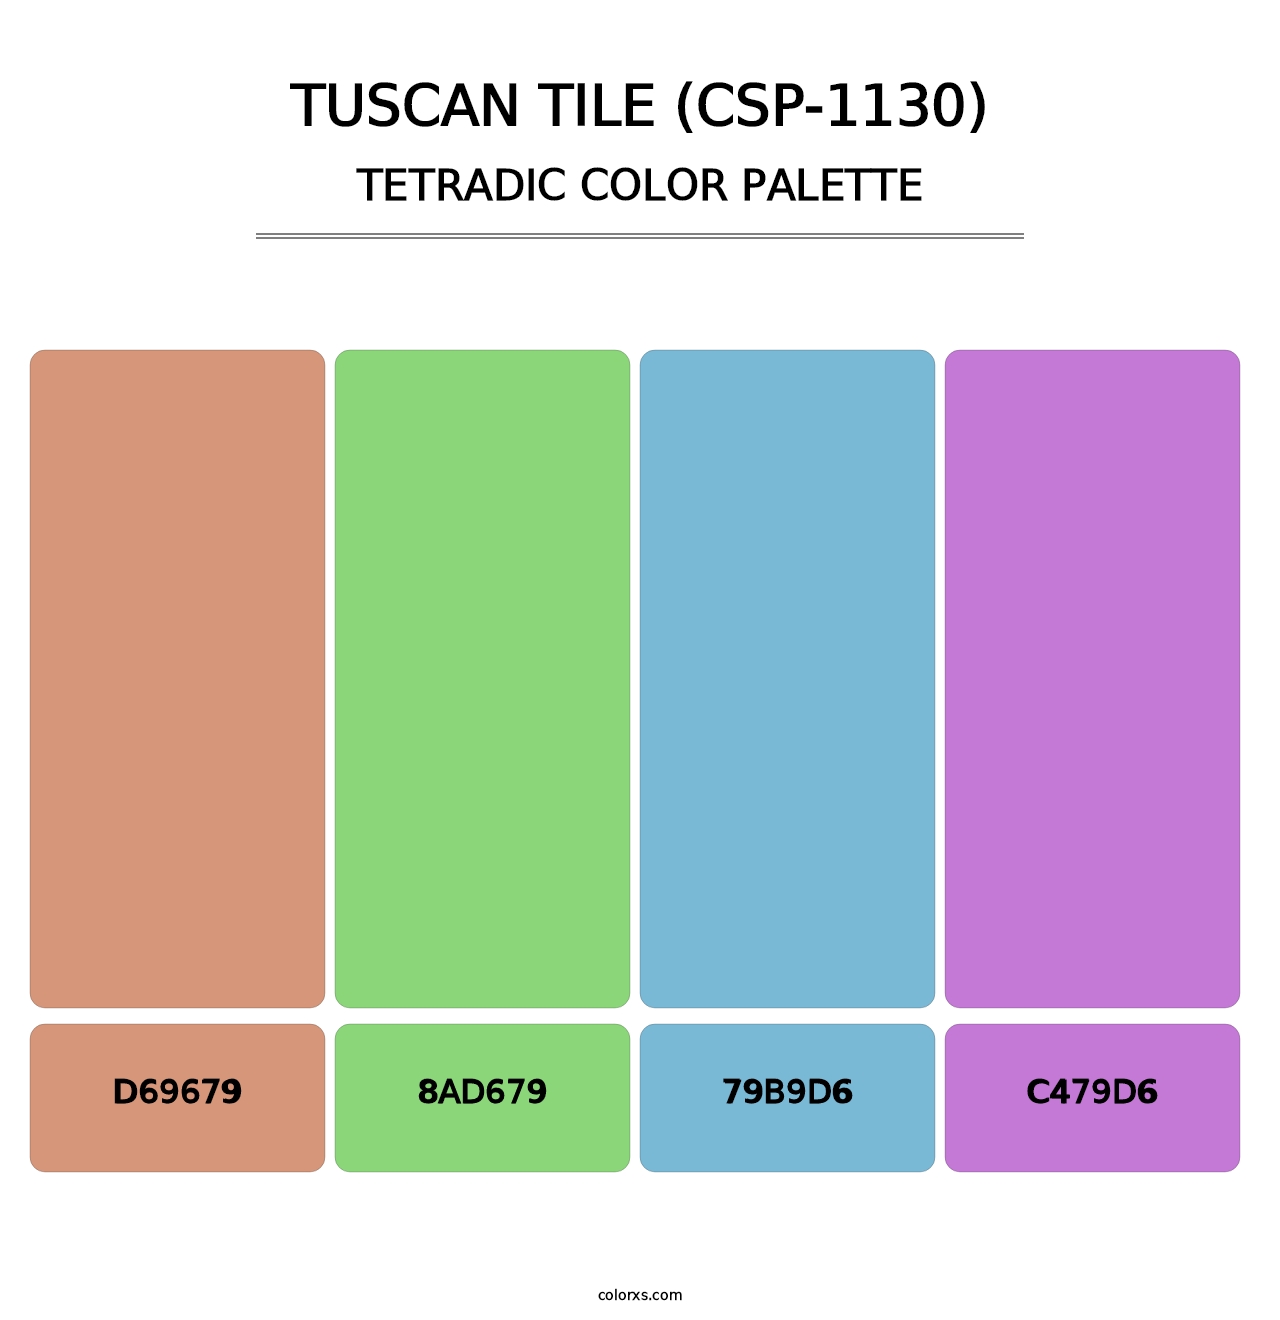 Tuscan Tile (CSP-1130) - Tetradic Color Palette